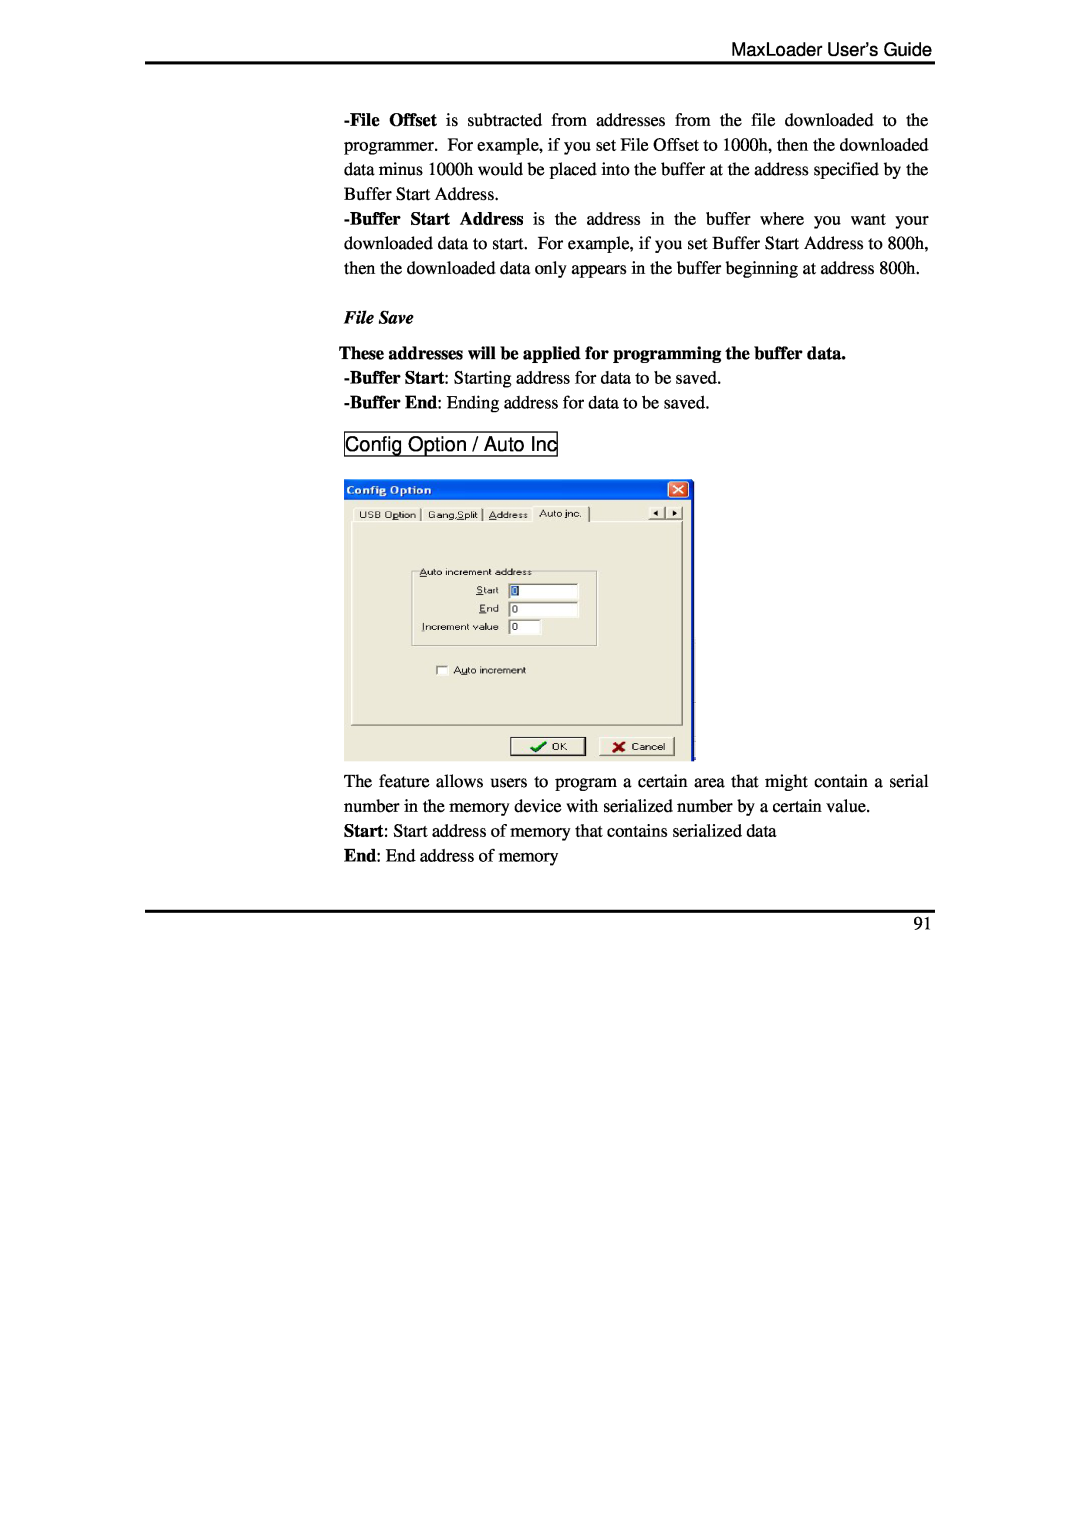 IBM MaxLoader manual Config Option / Auto Inc, File Save 